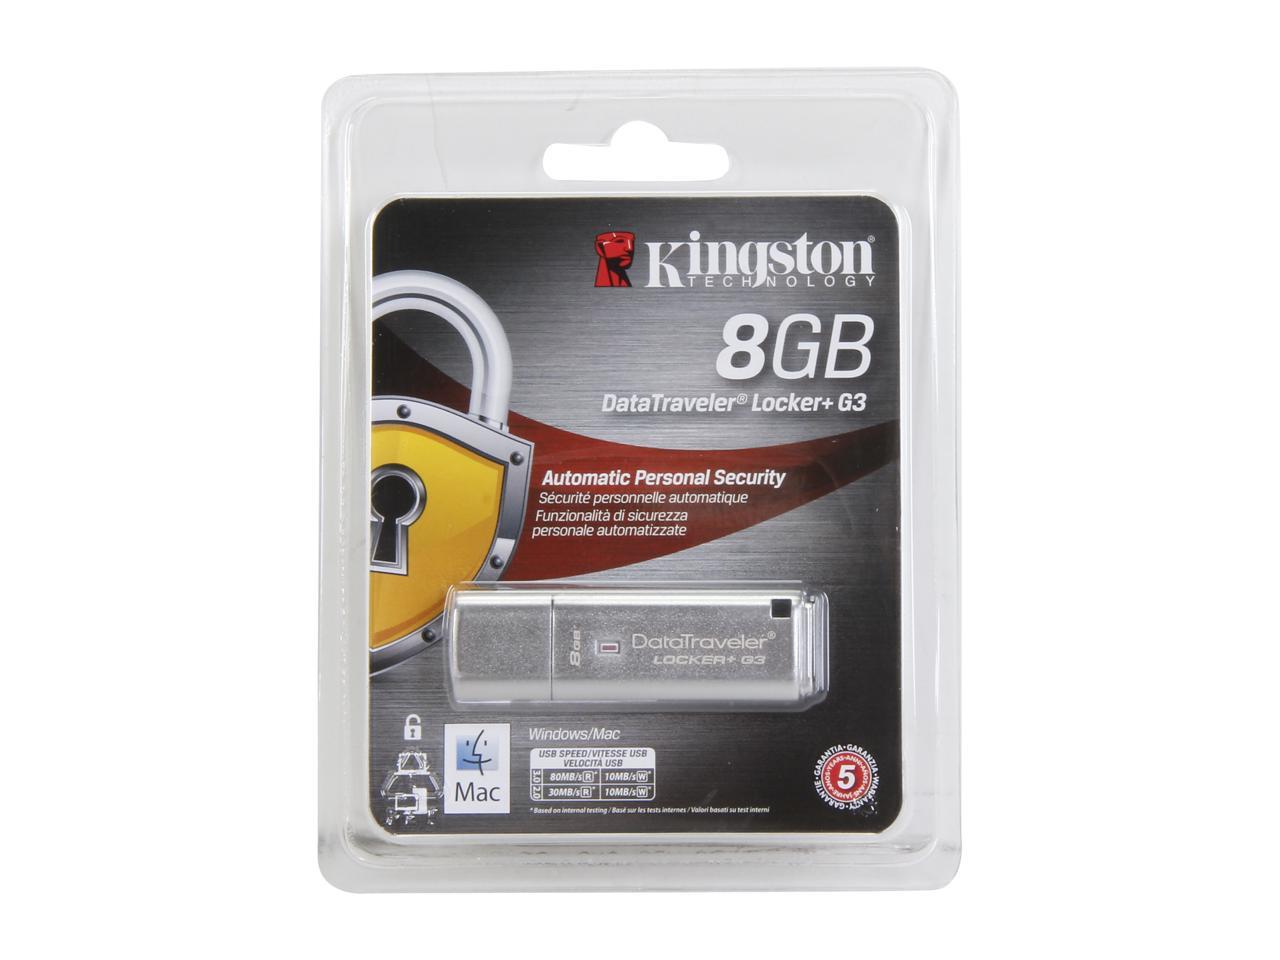 Kingston 8GB Data Traveler Locker + G3, USB 3.0 Flash Drive with ...